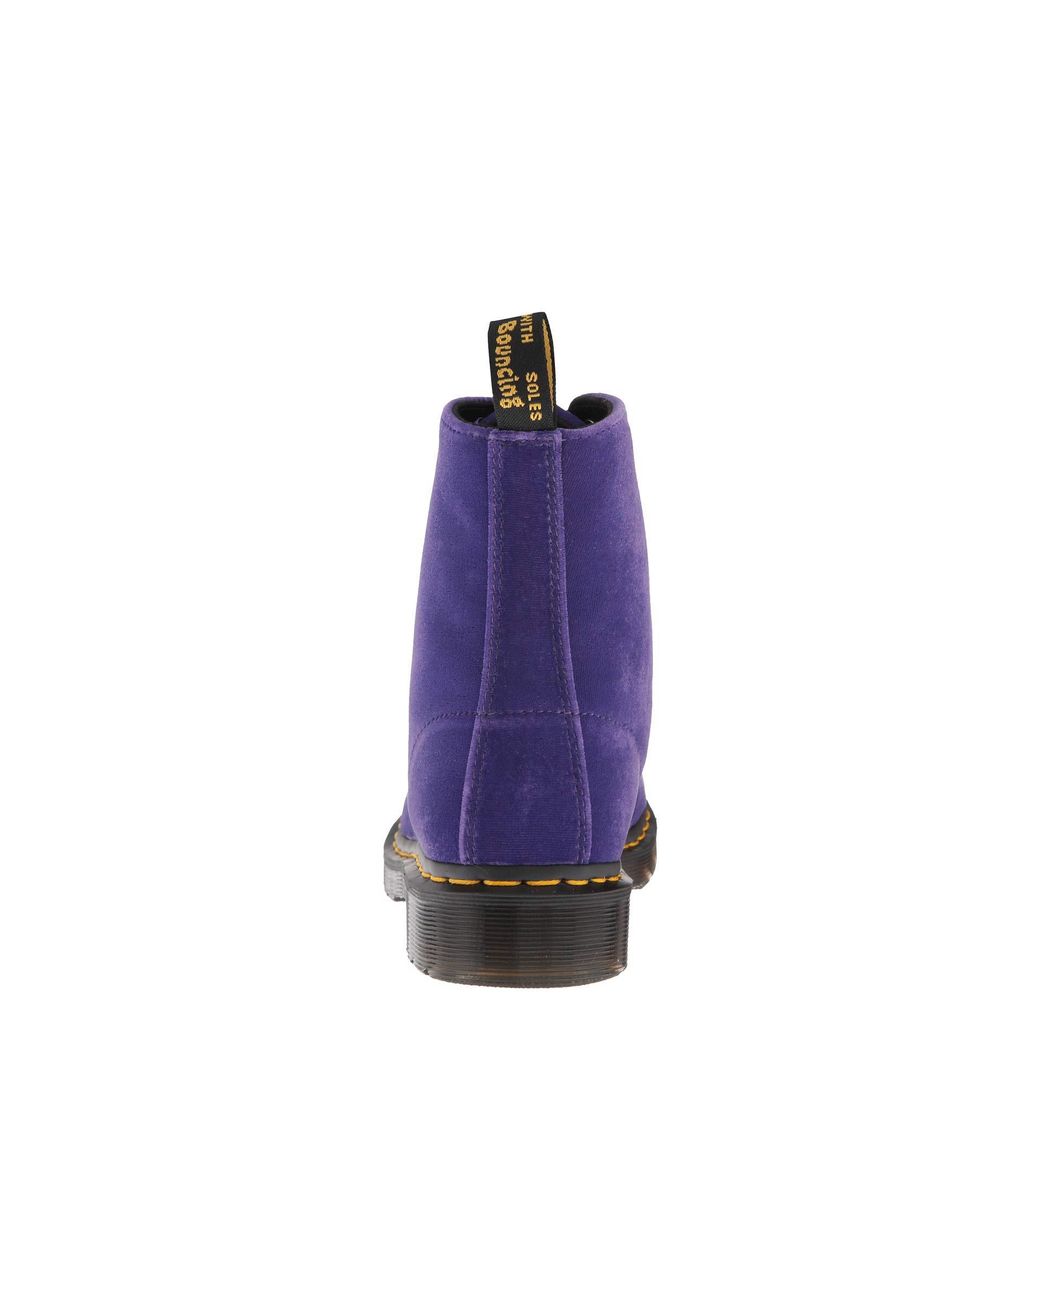 Dr. Martens Unisex-adult's 1460 Pascal Velvet Boots (dusty Violet) in  Purple | Lyst